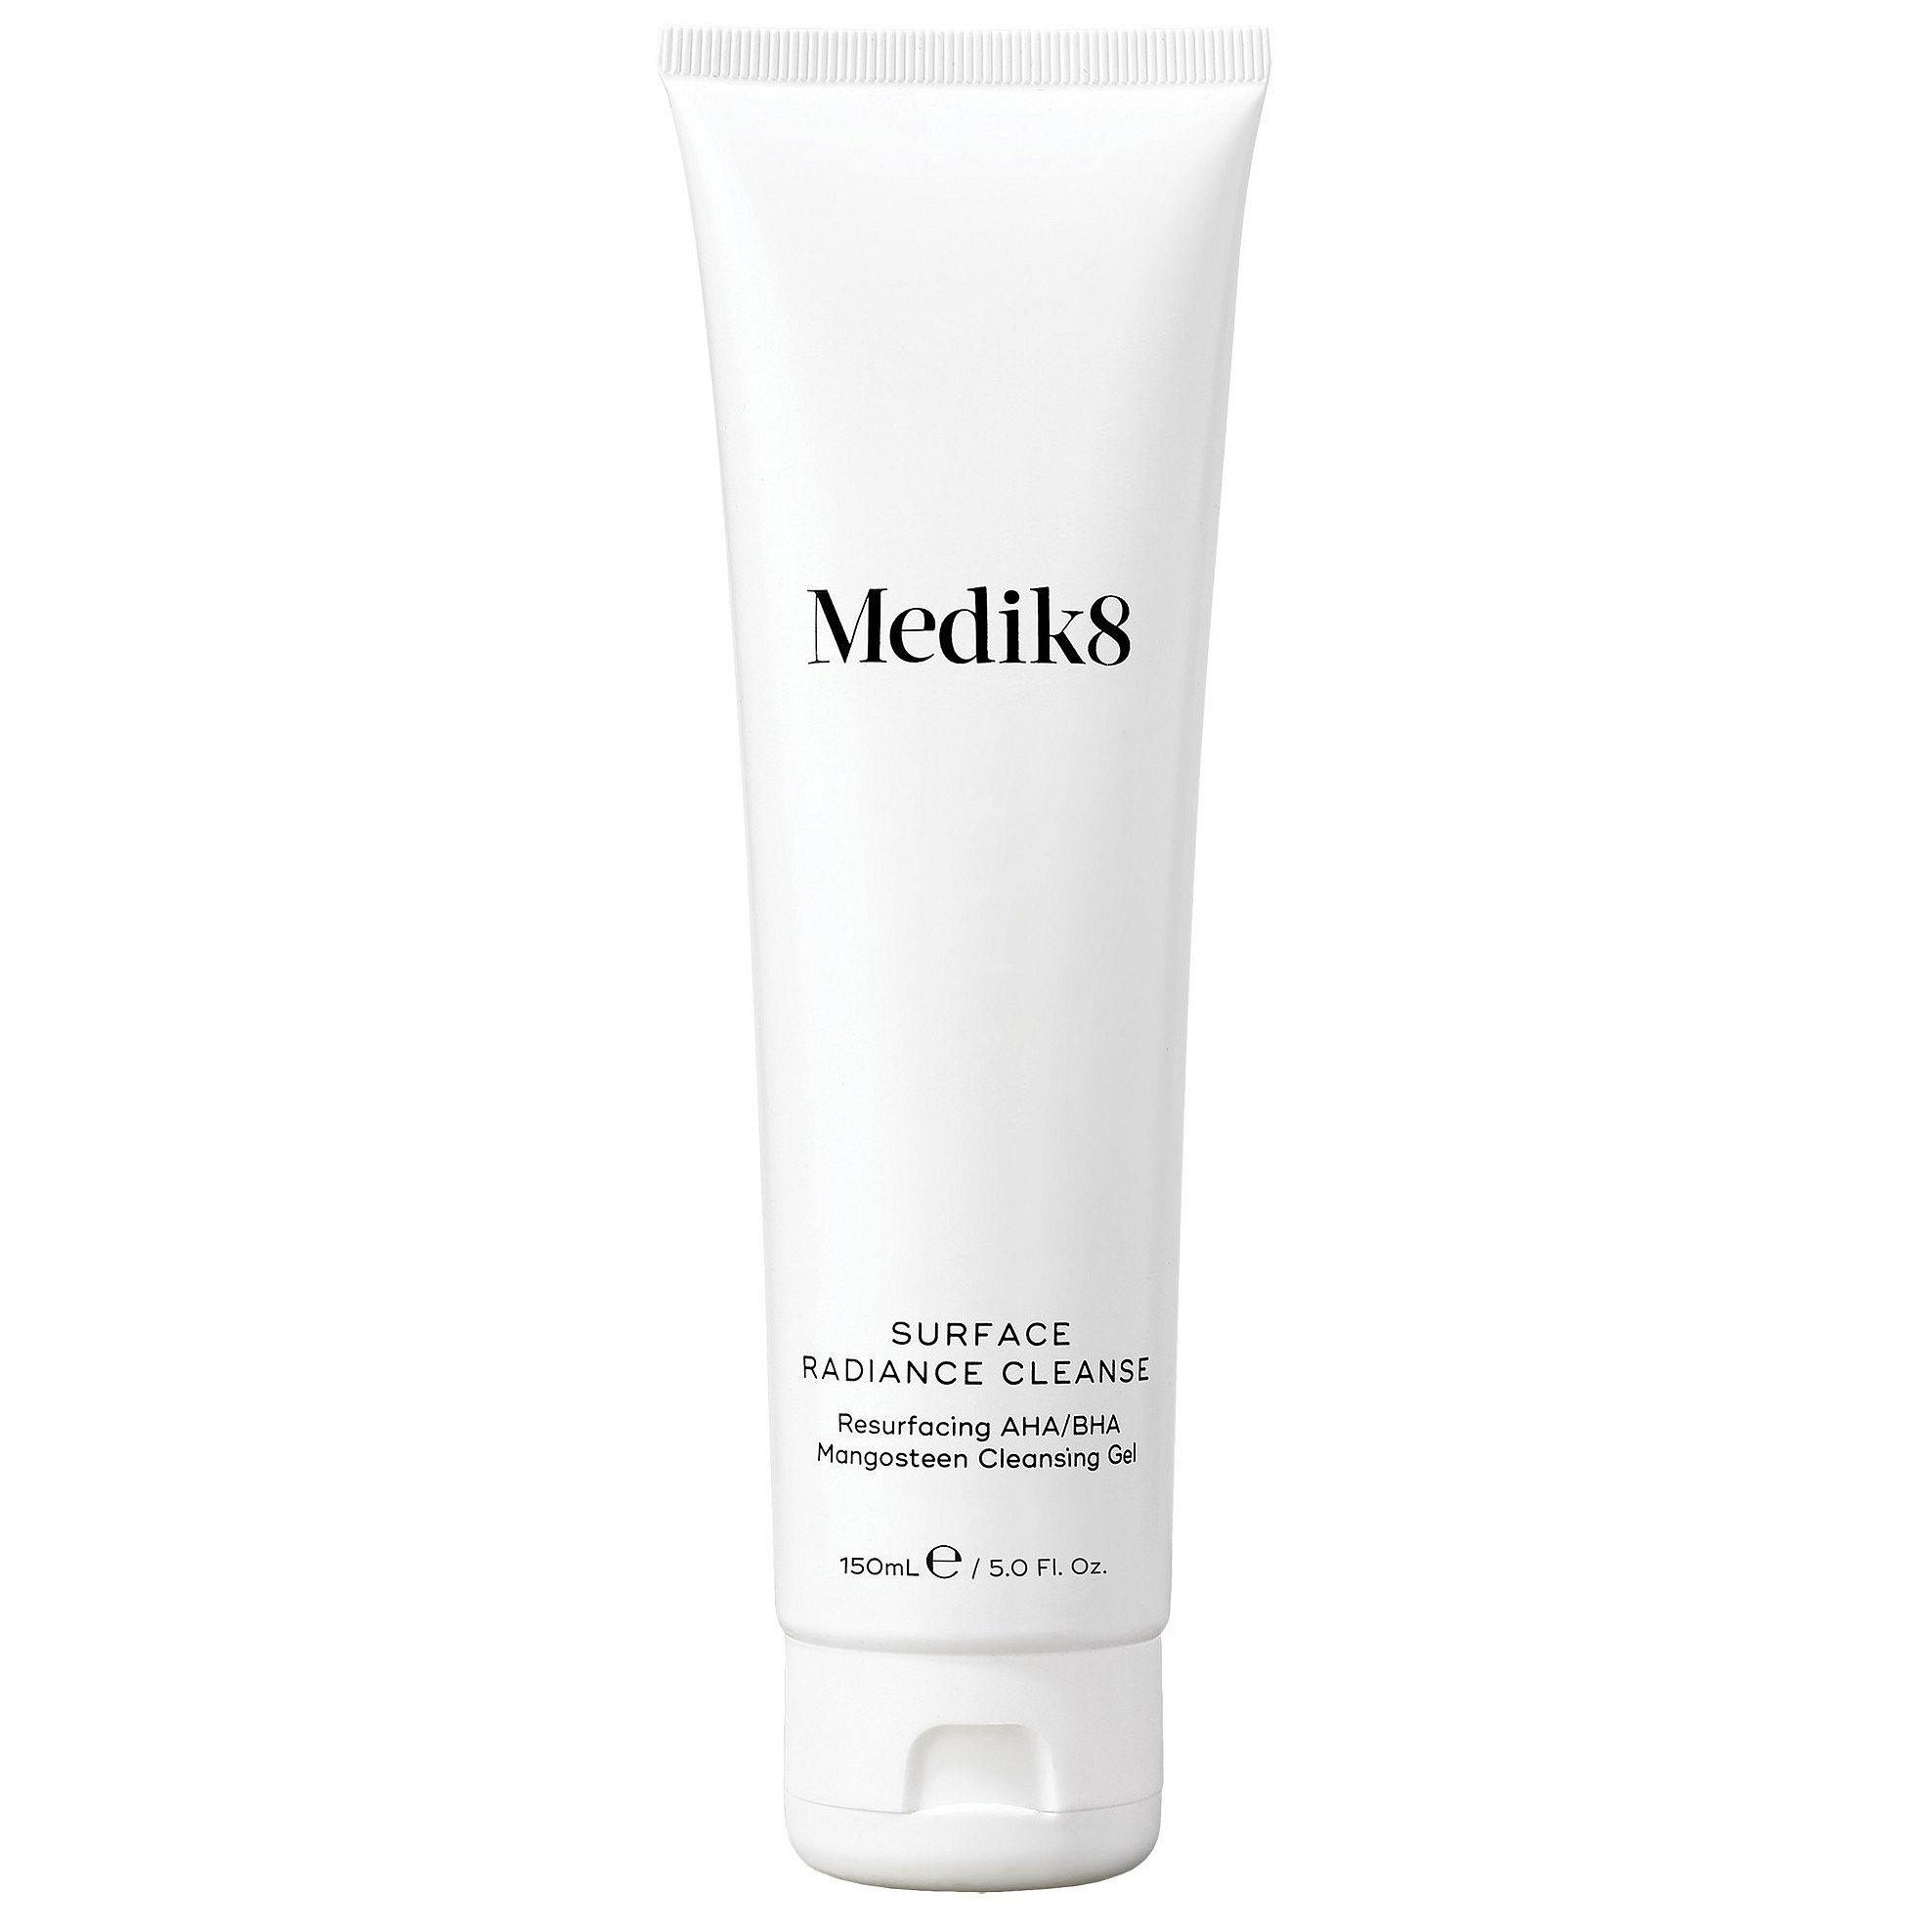 Medik8 Pore Cleanse Gel Intense - Čisticí gel na ucpané póry 150ml